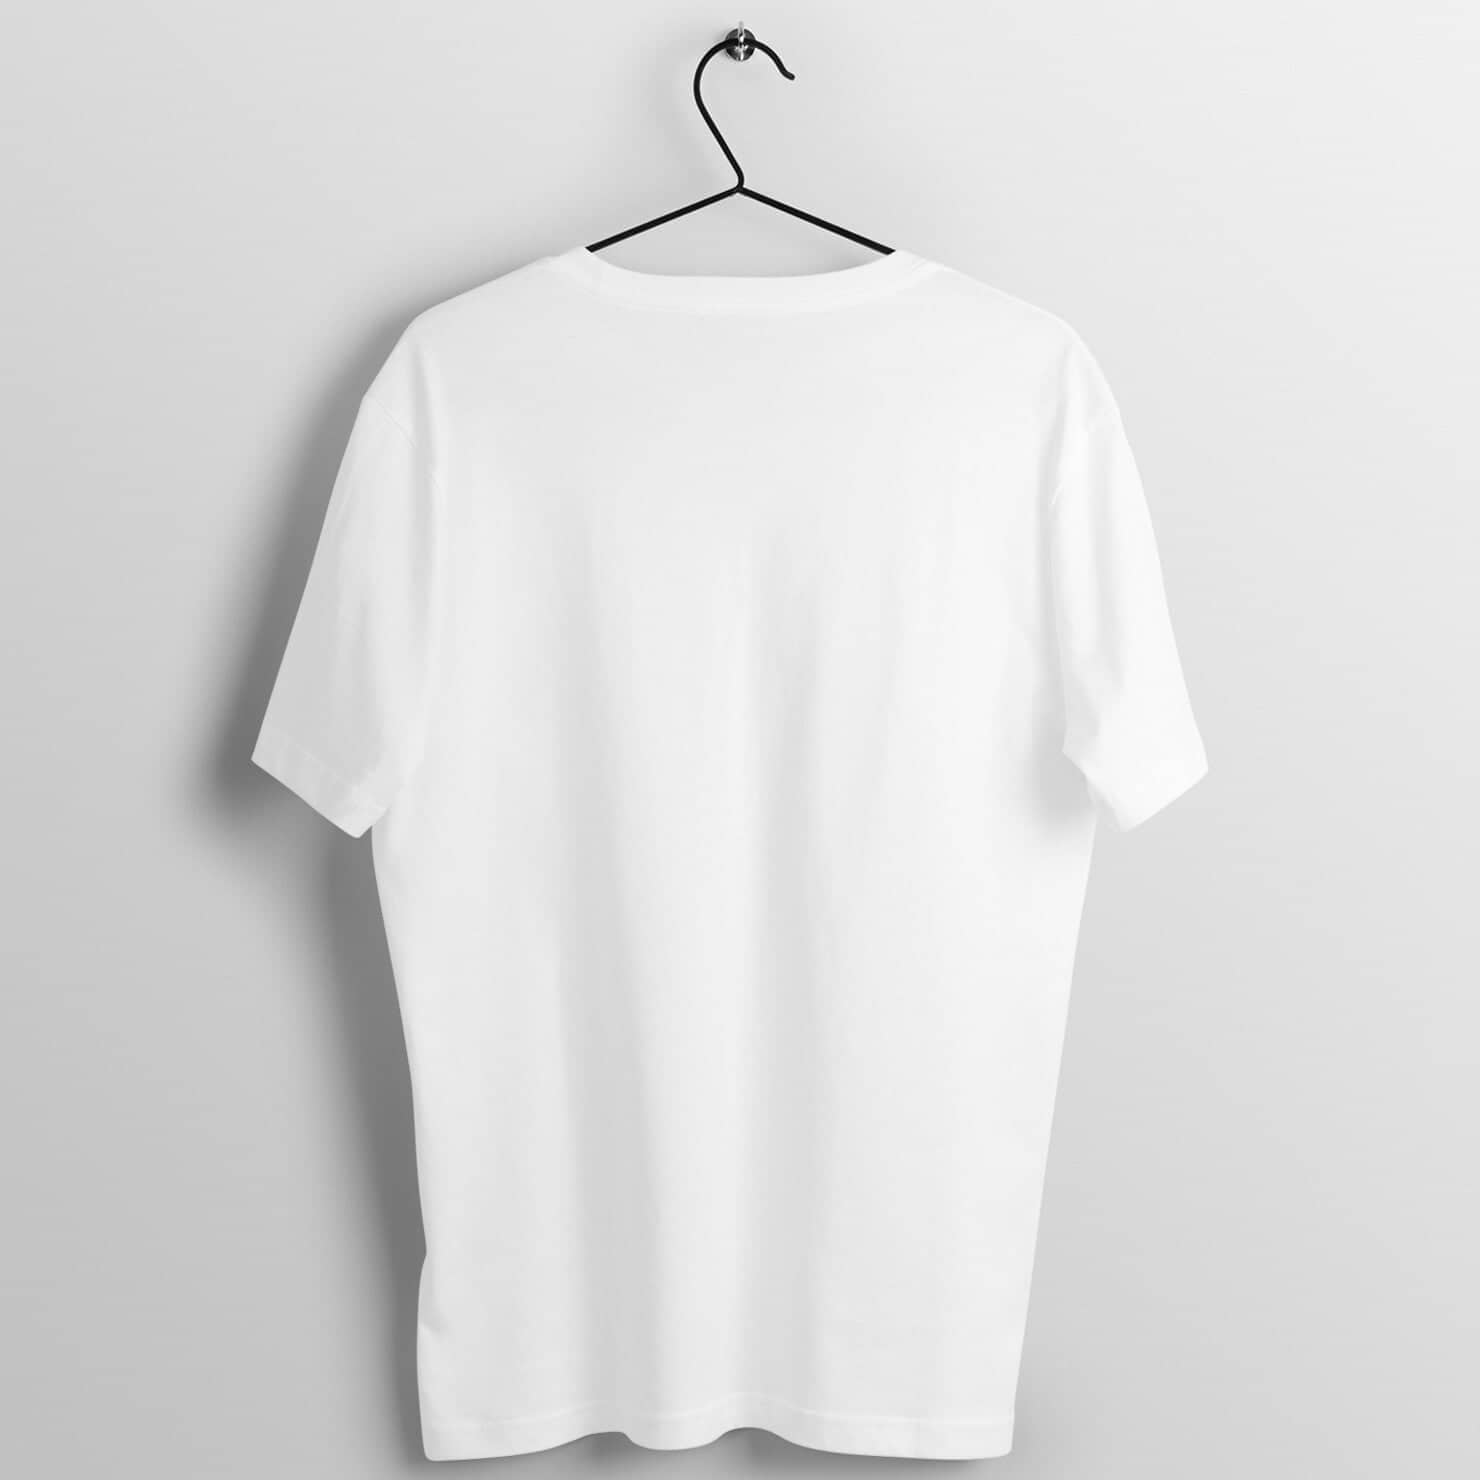 Atmanirbar Bharat Special White Entrepreneur T Shirt for Men and Women Printrove 